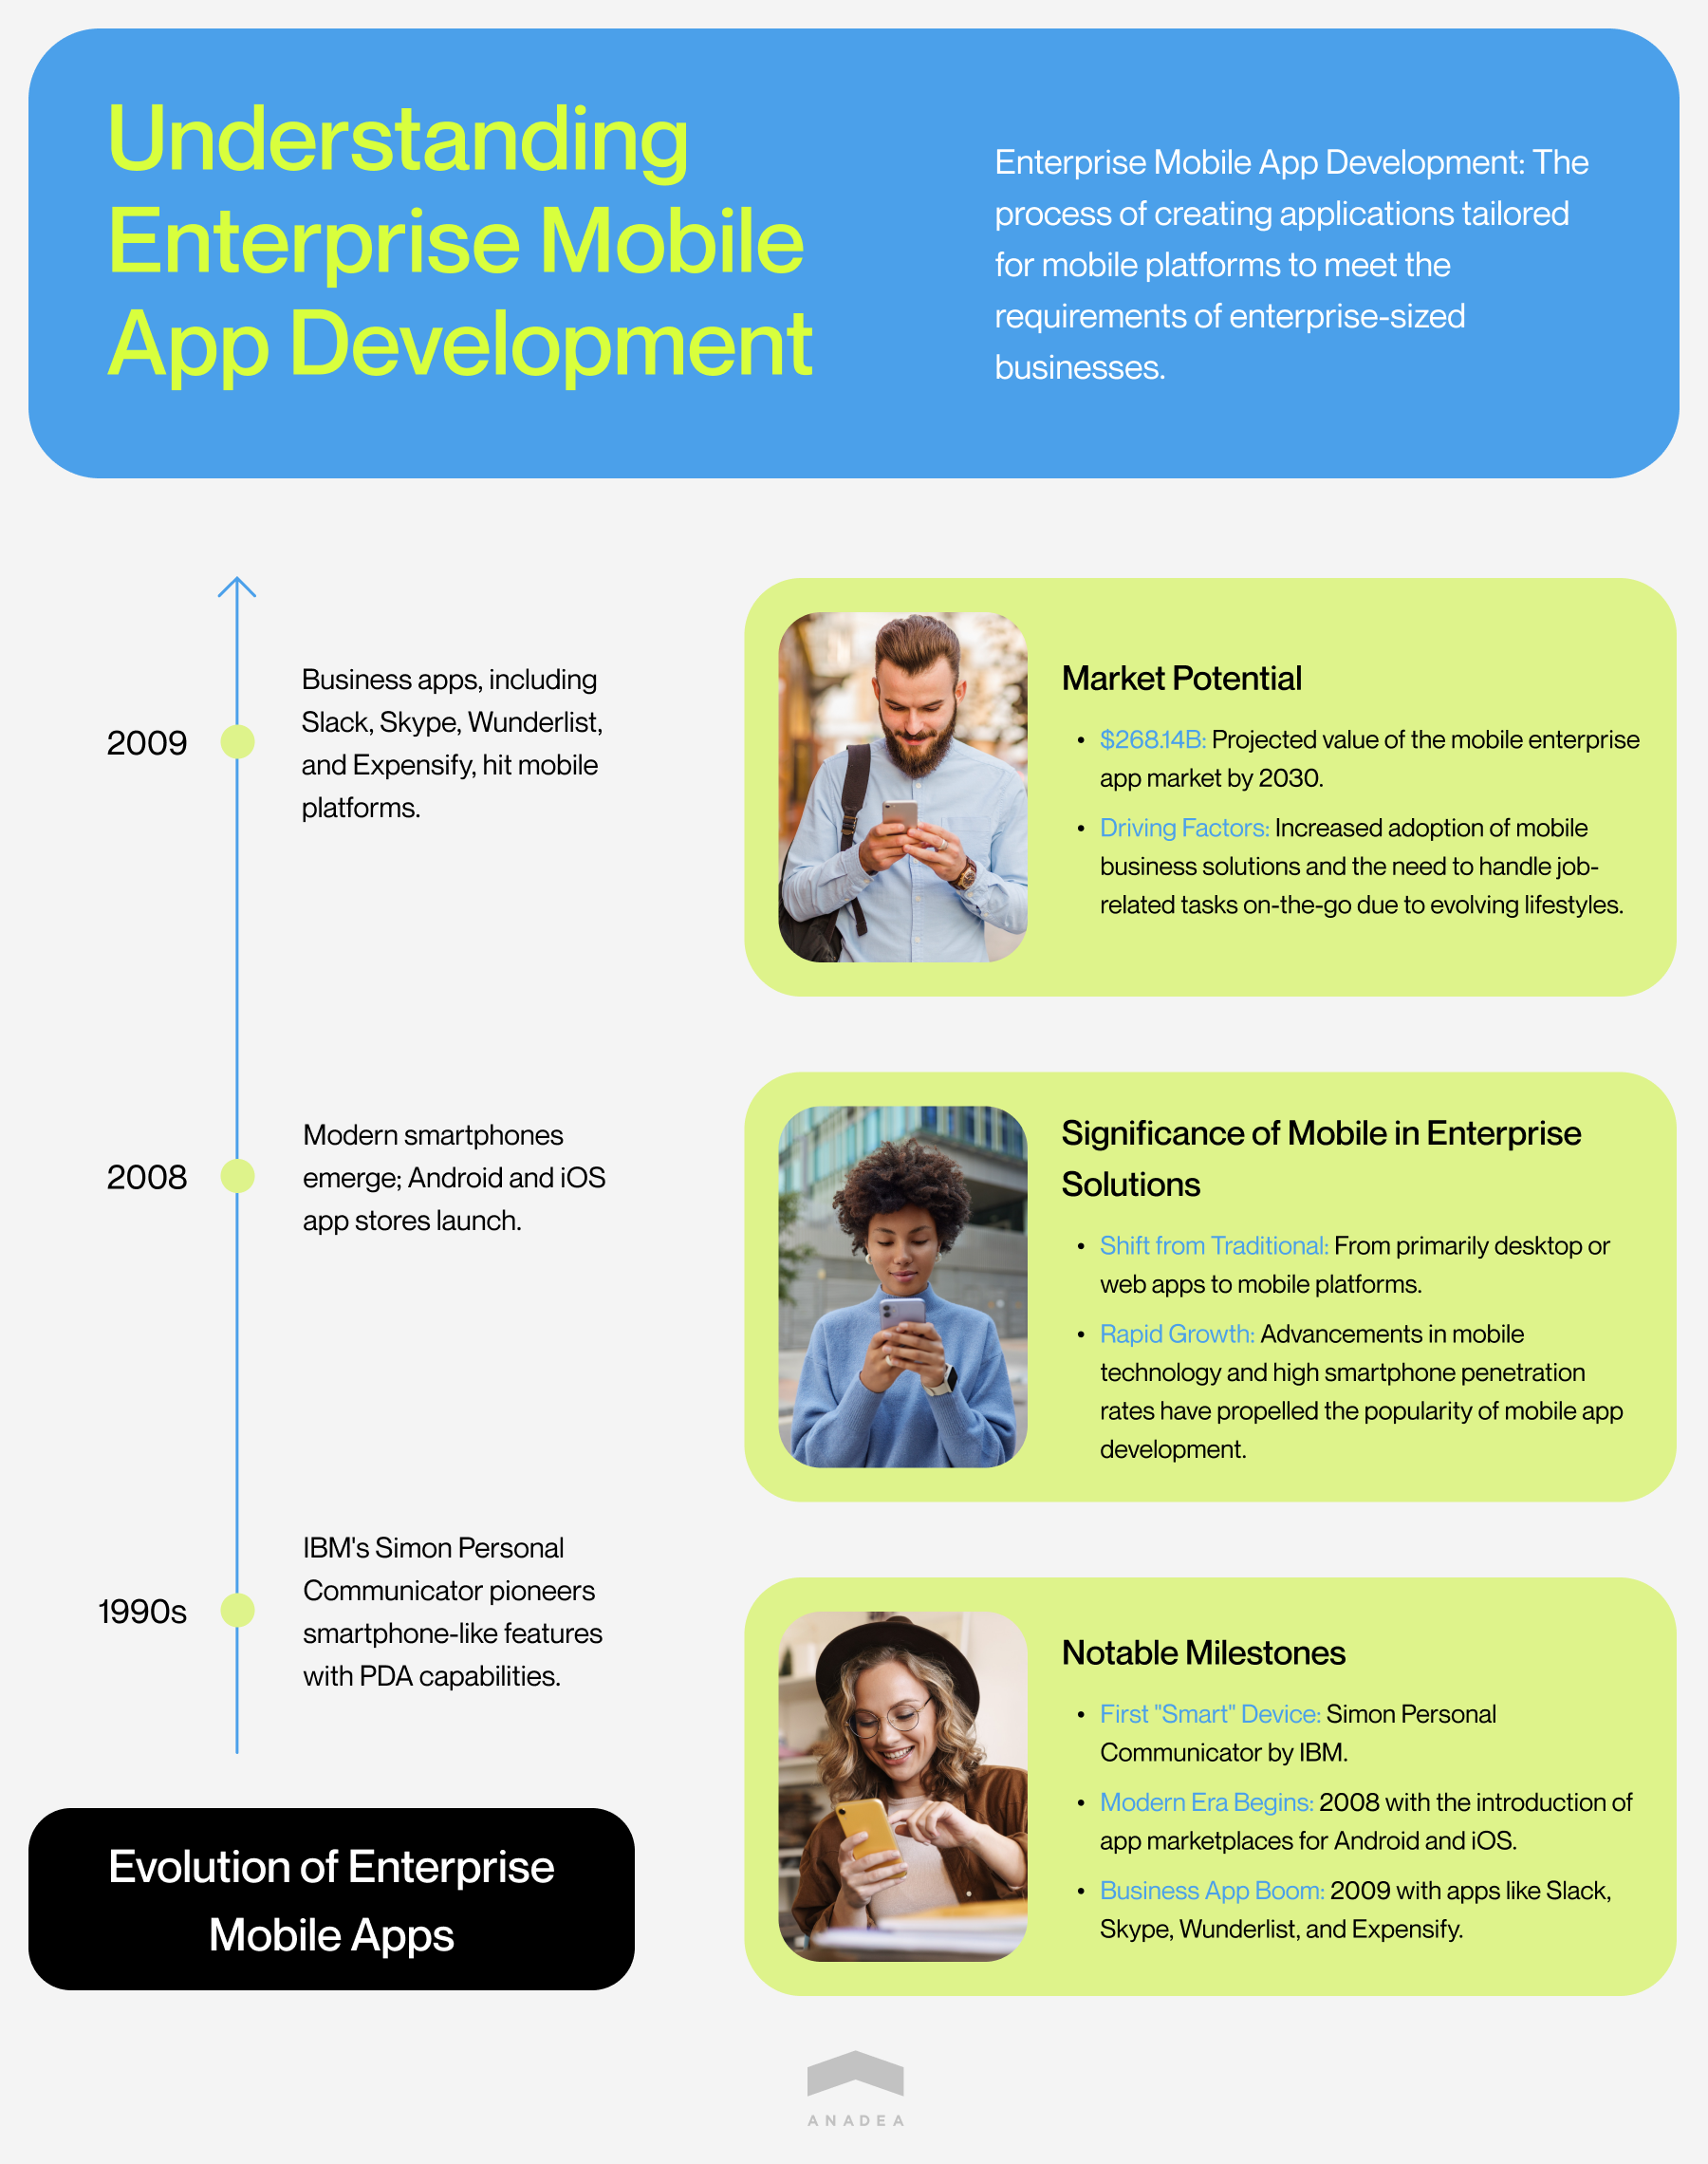 Evolution of enterprise mobile apps